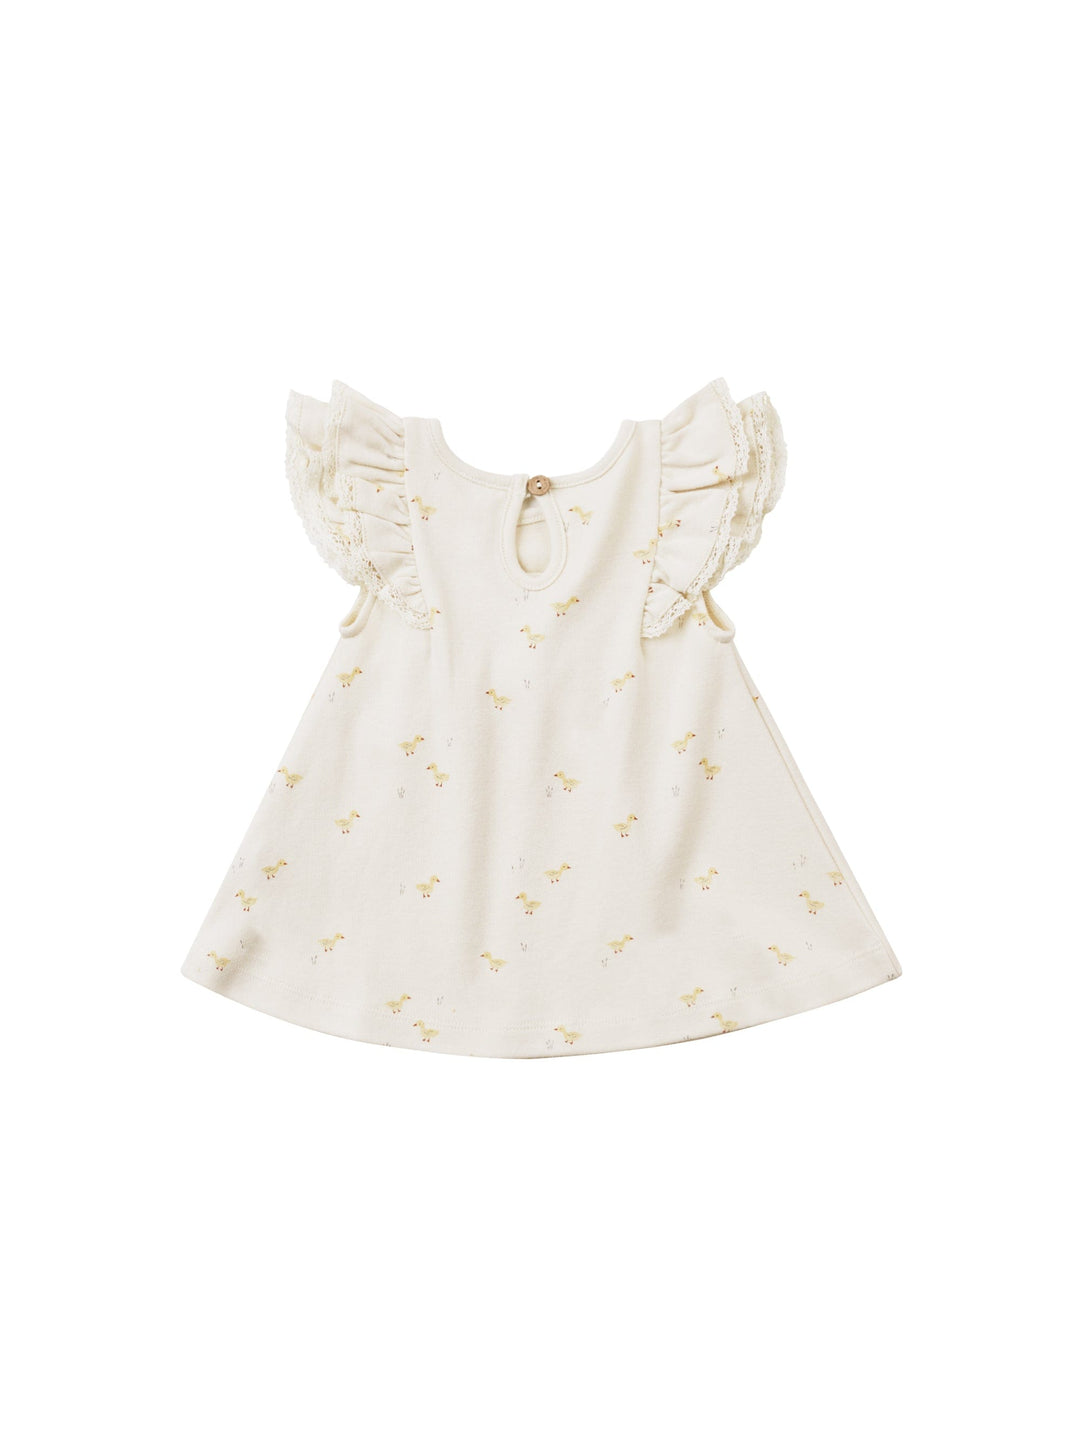 Quincy Mae Baby & Toddler Dresses Flutter Dress & Bloomer - Ducks